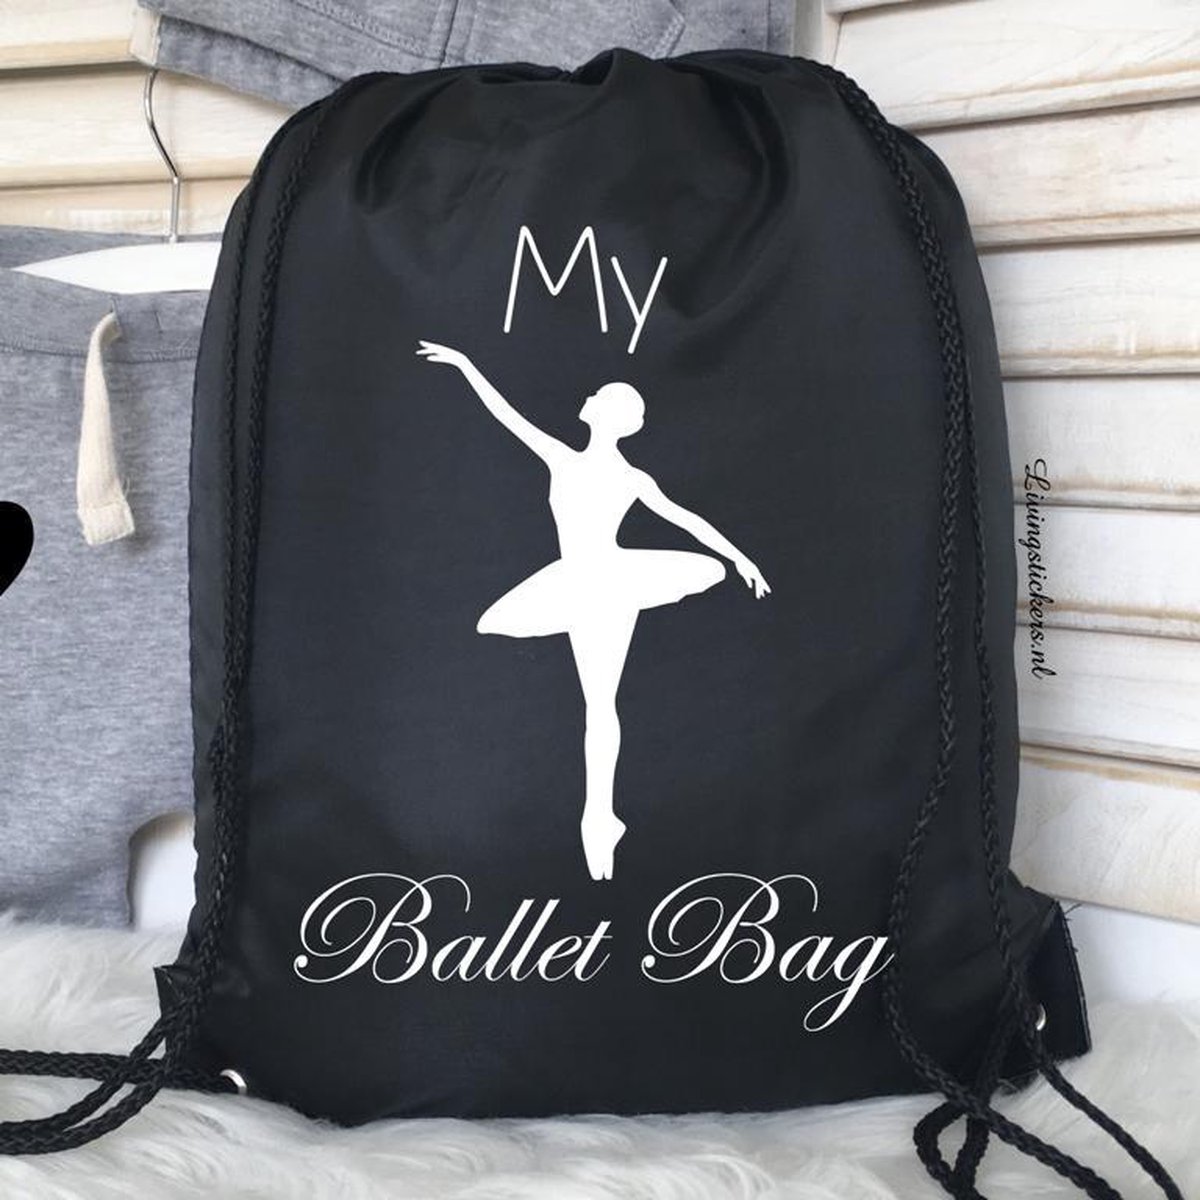 Tas rugzak nylon-gymtas meisje-jongen-my ballet bag